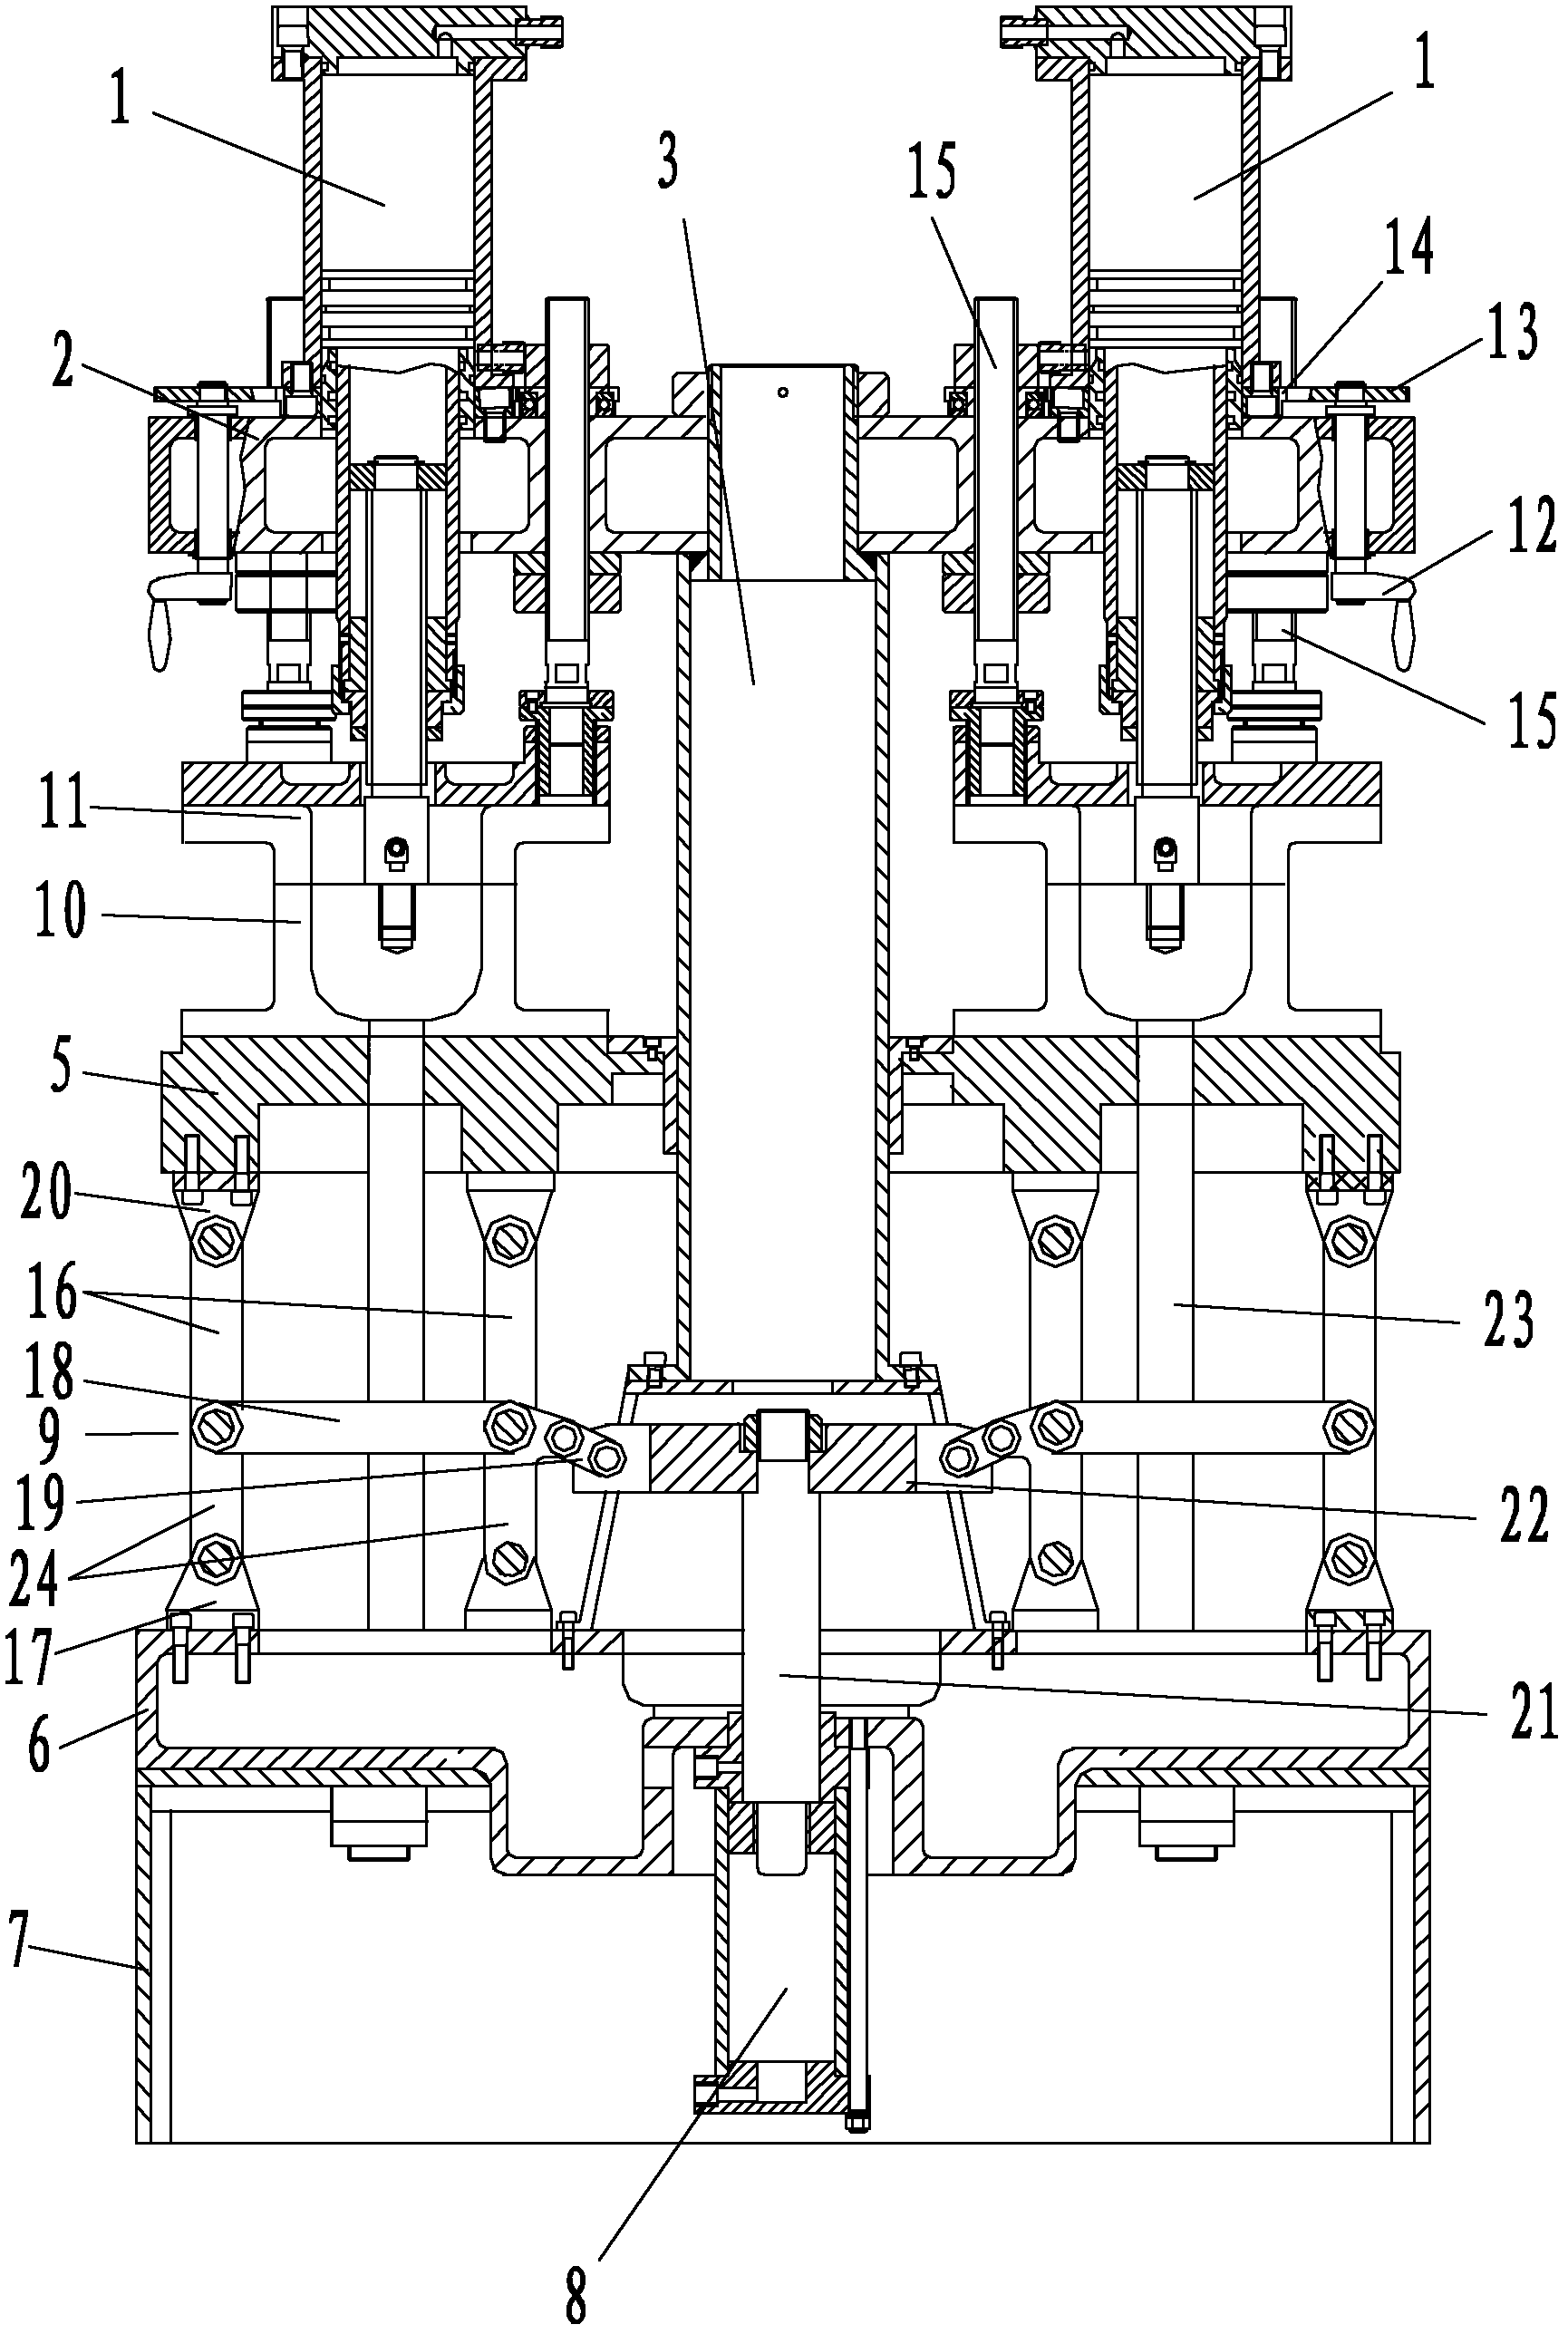 Multi-station hydraulic drawing machine